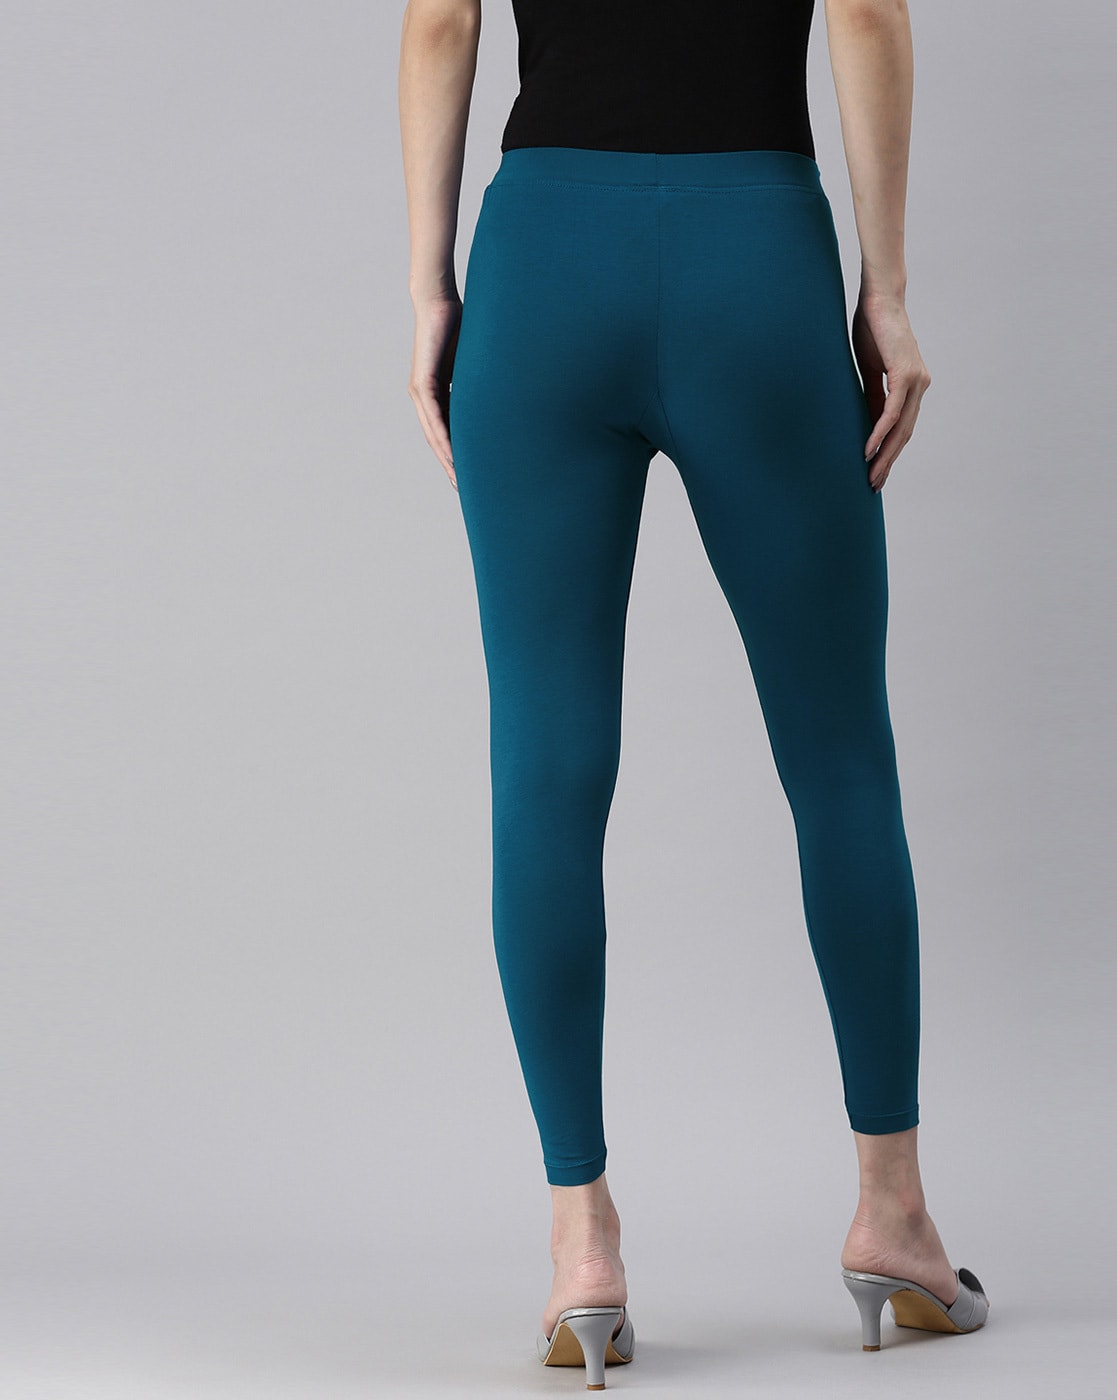 Dark Goldenrod and Turquoise Colored Pattern Capri Leggings - Beautiful  #Yoga Pants - #Exercise Leggings and #Runni… | Turquoise leggings, Leggings,  Leggings design